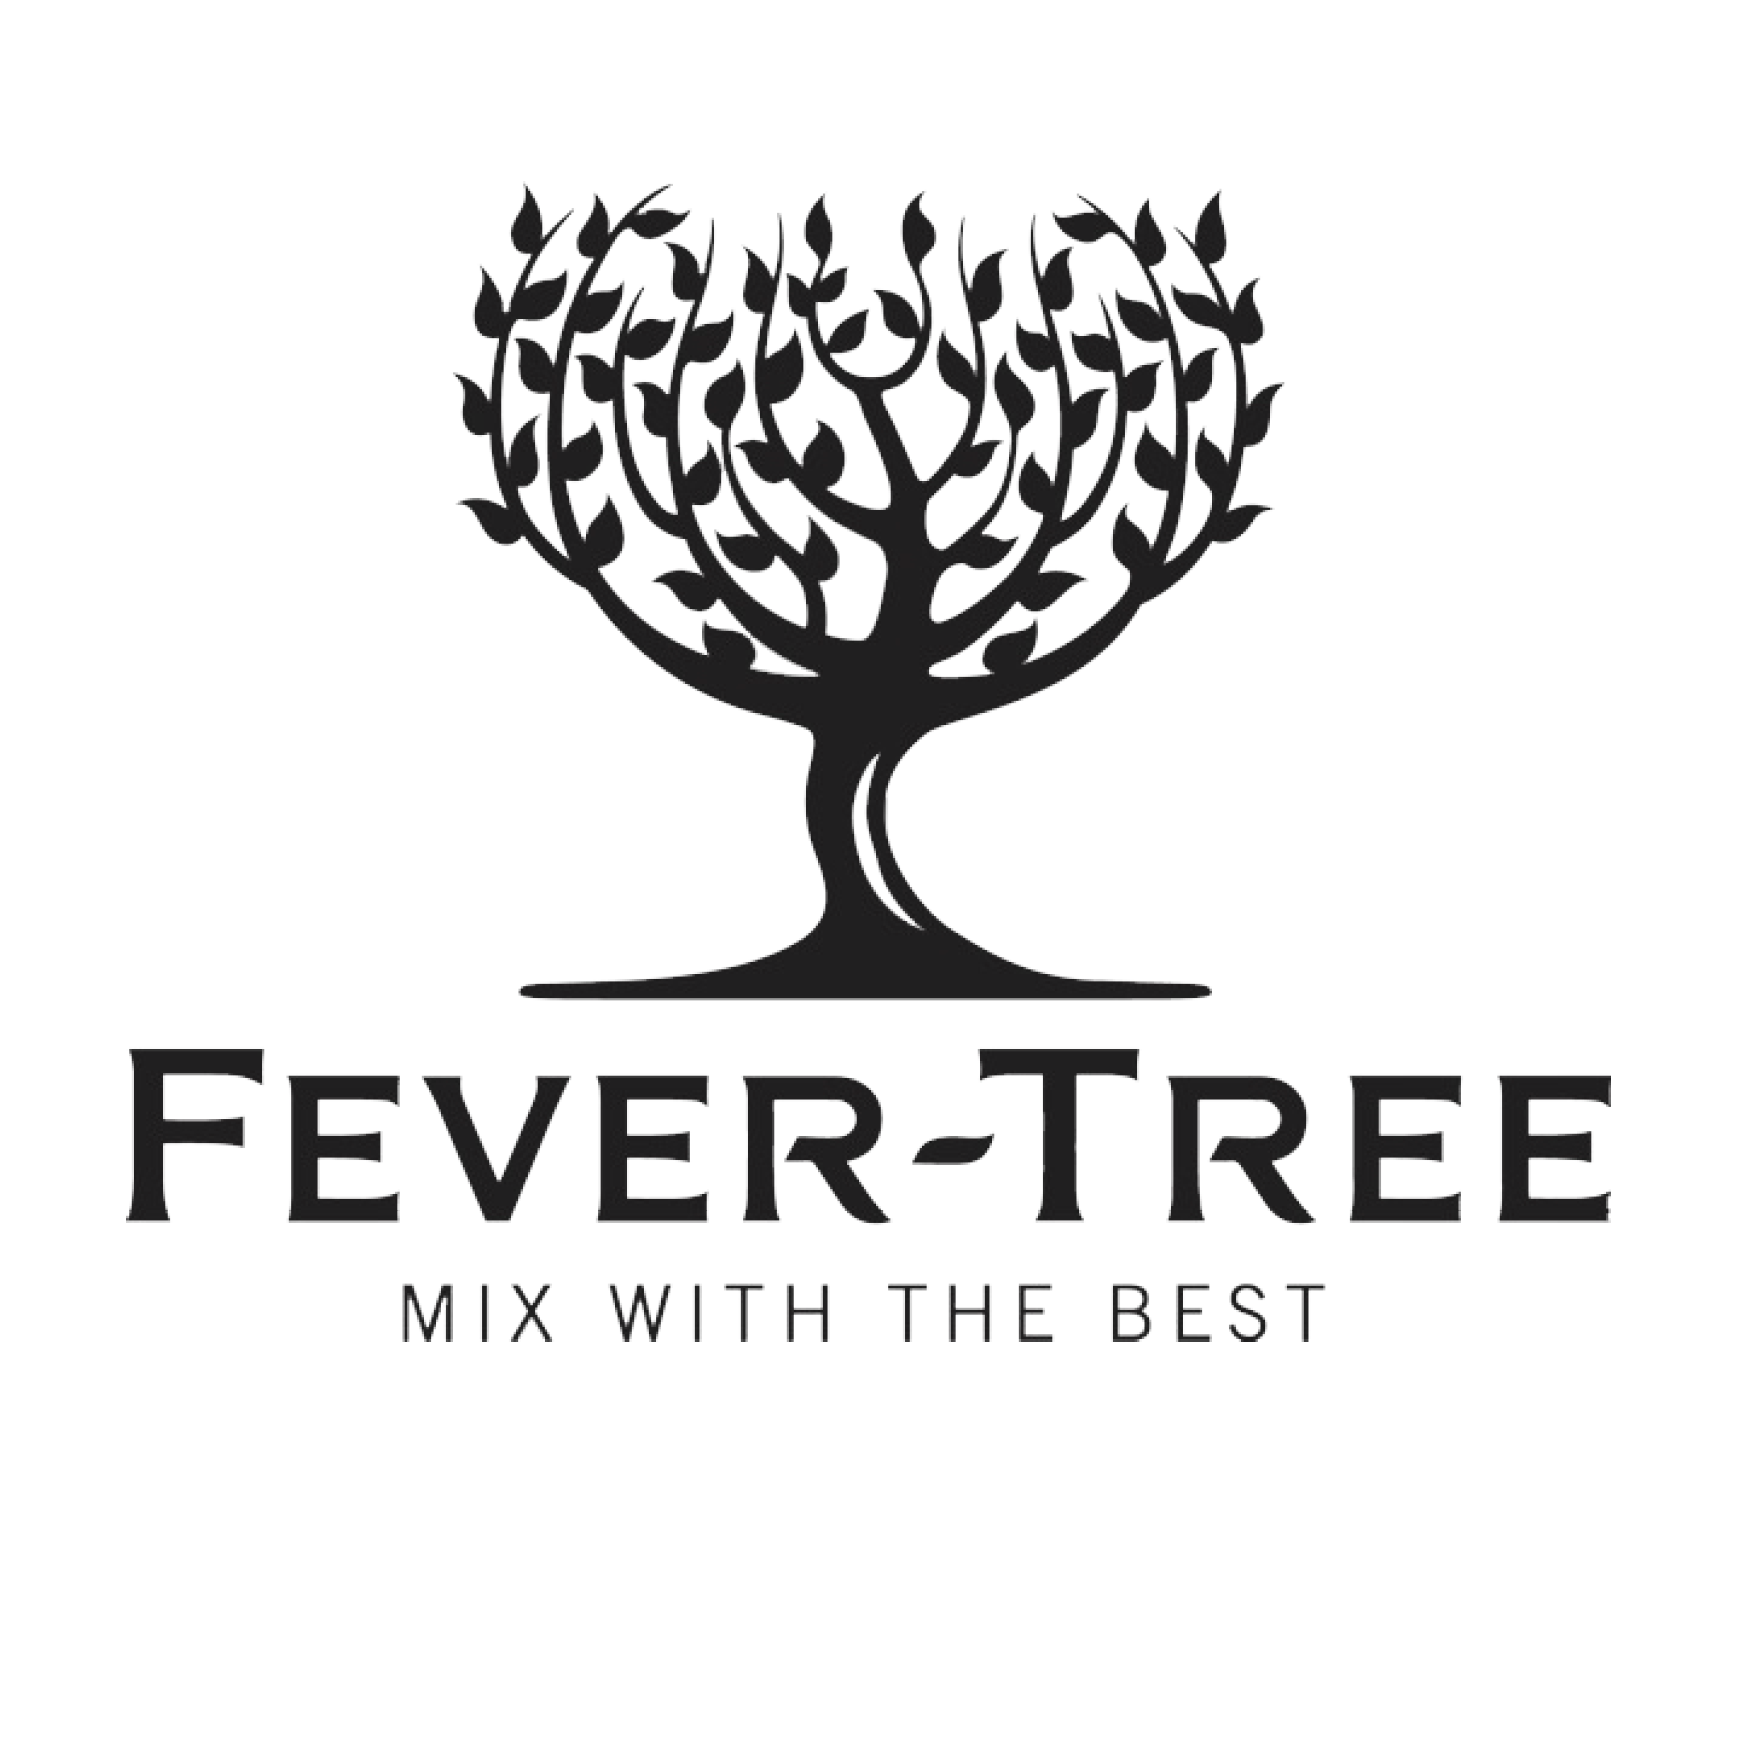 Brand fever tree